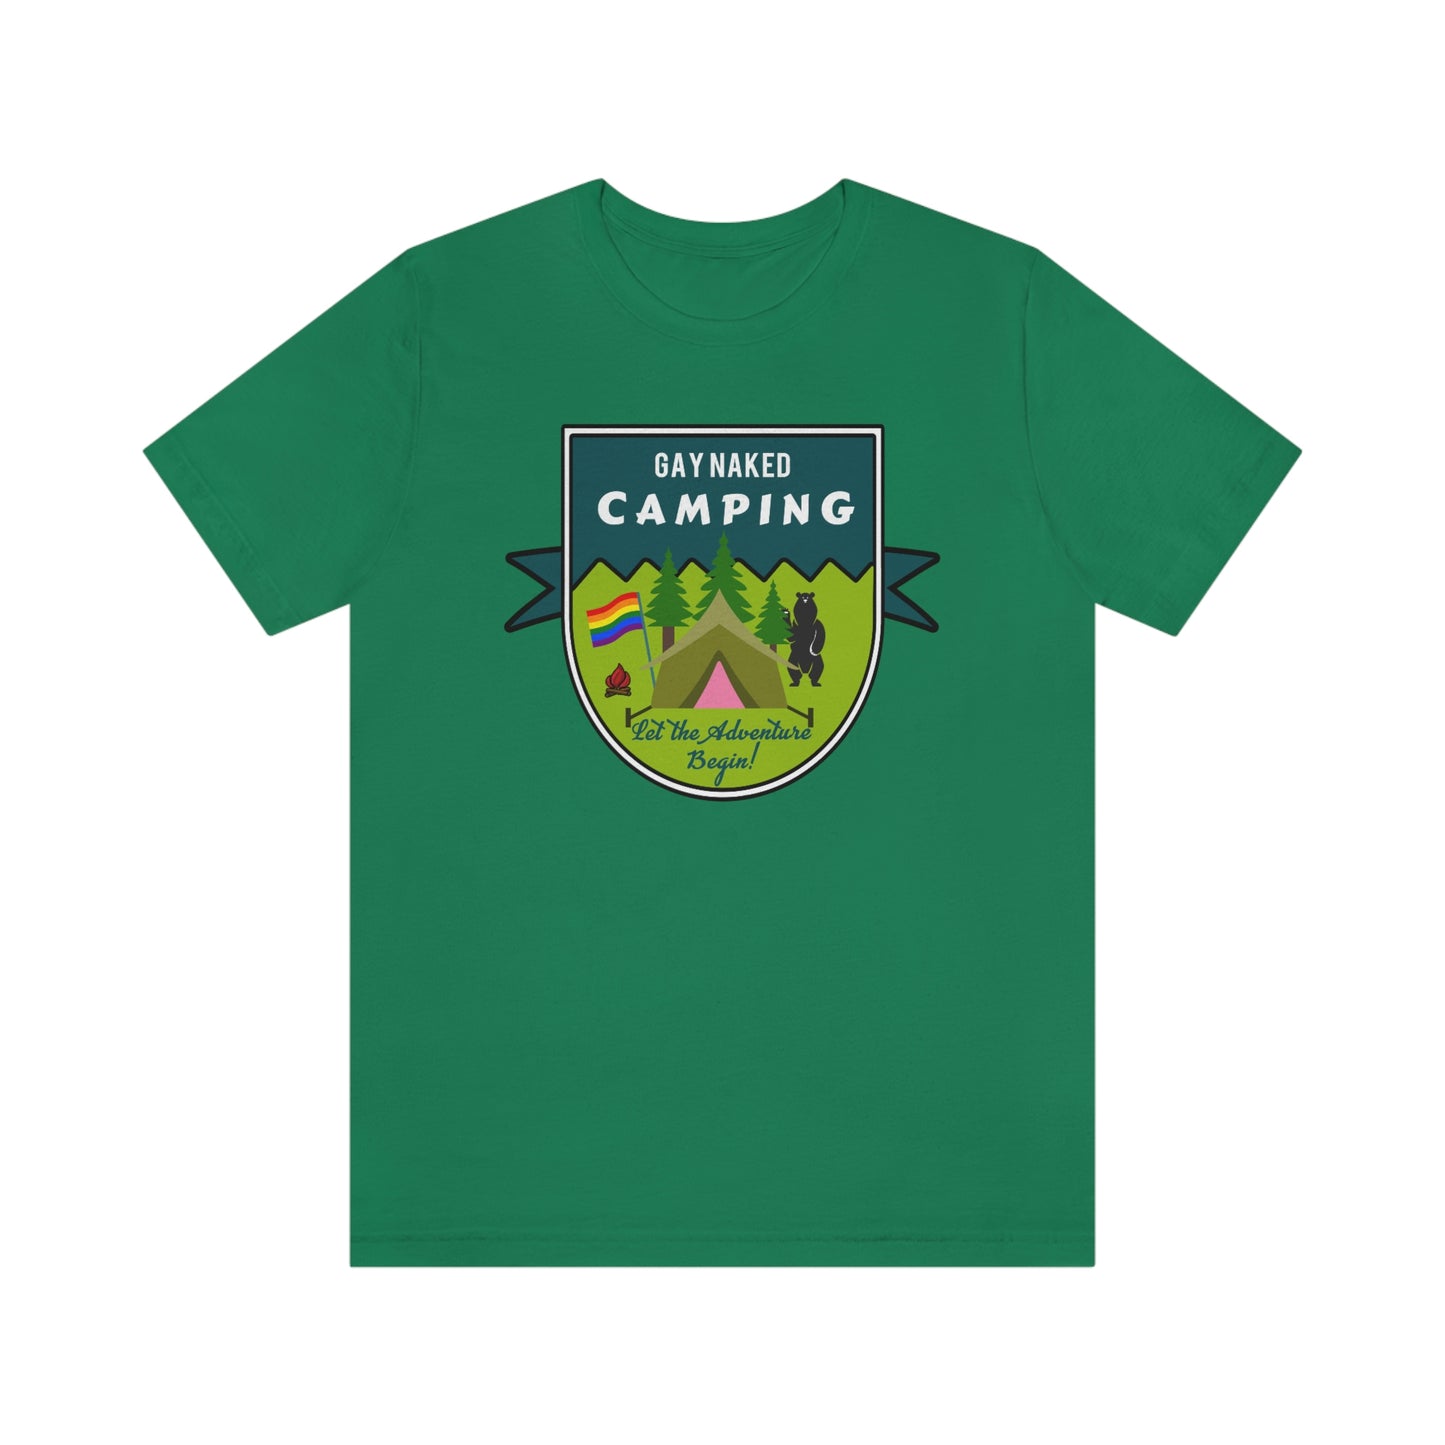 Camiseta unisex para adultos con insignia de camping desnuda gay